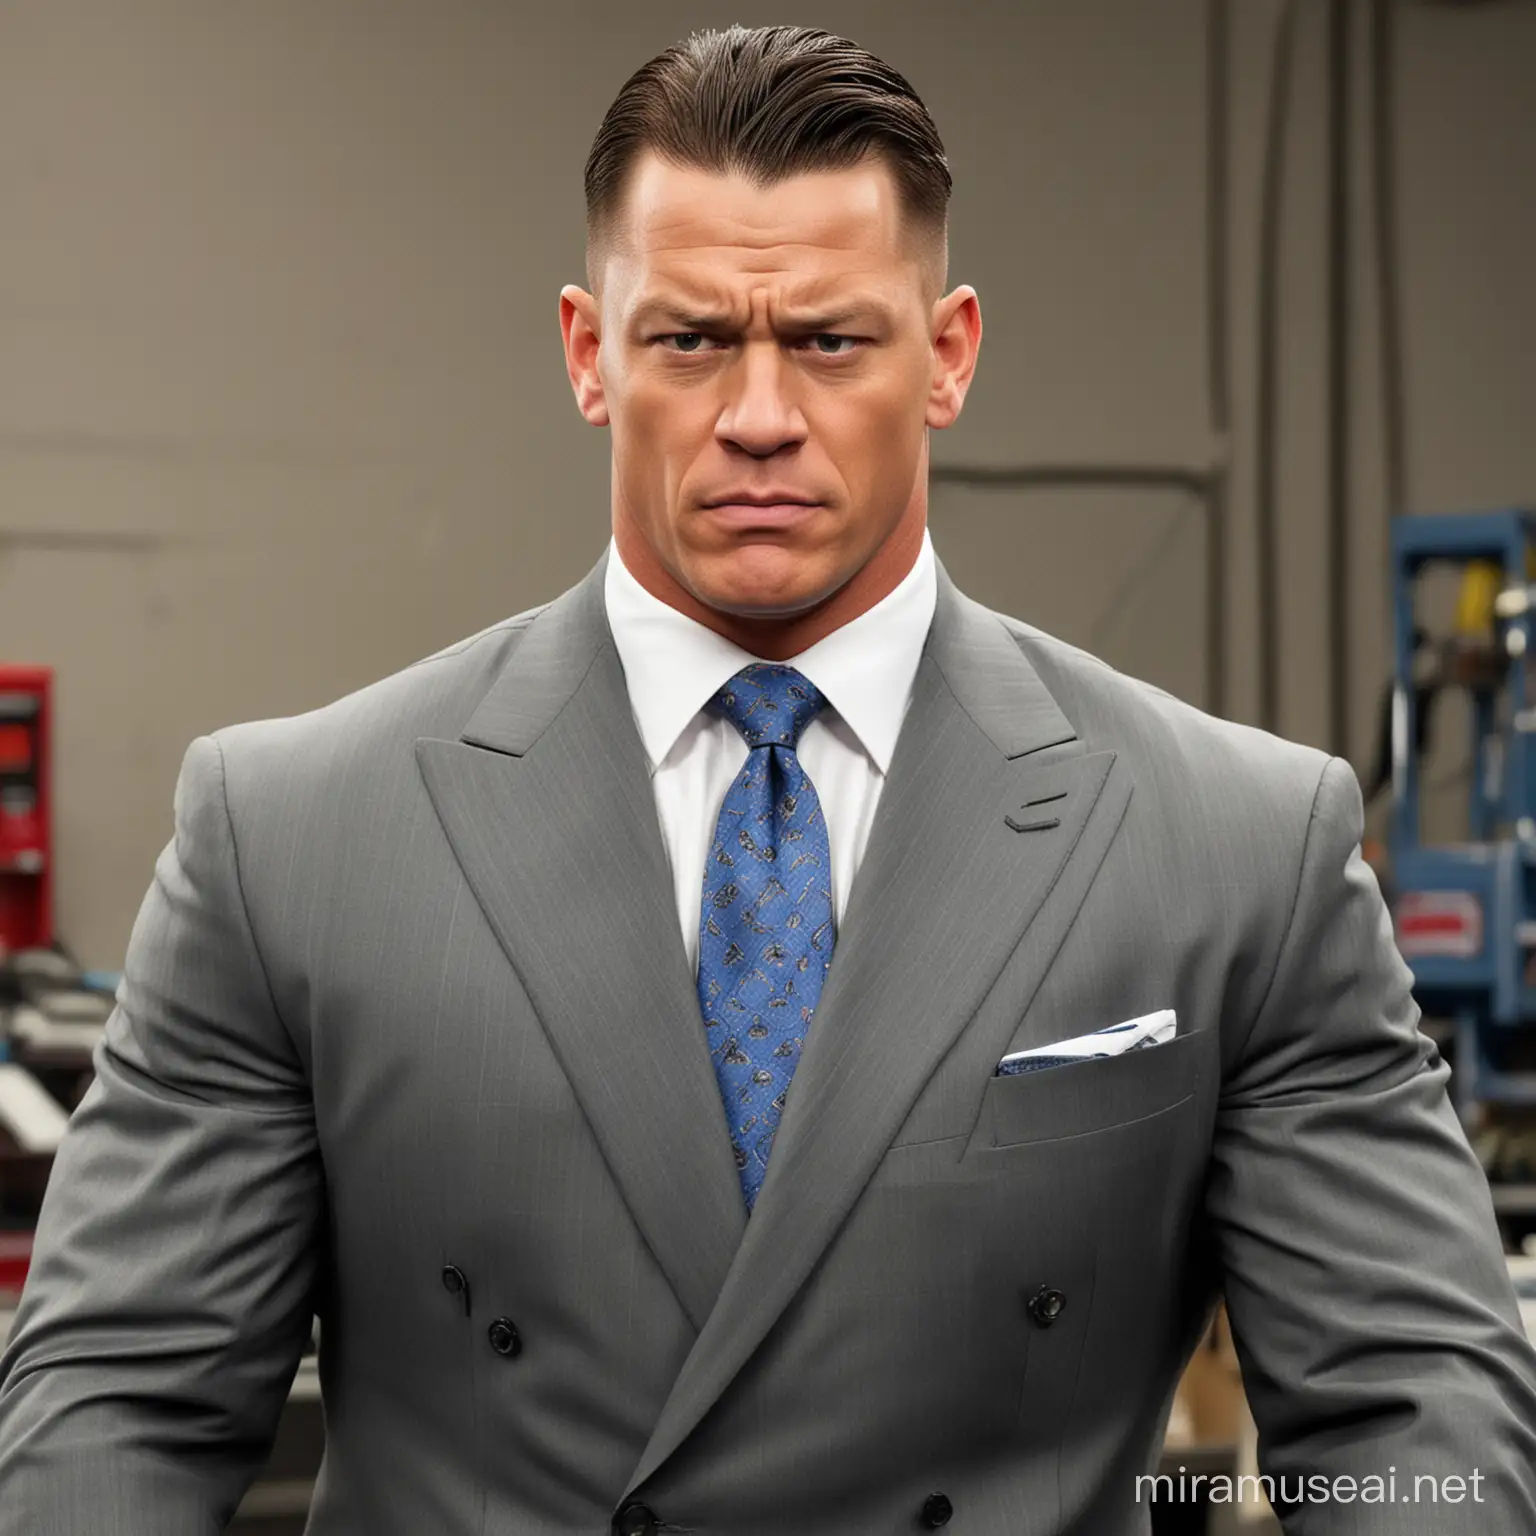 HVAC Shop Owner John Cena in Formal Attire